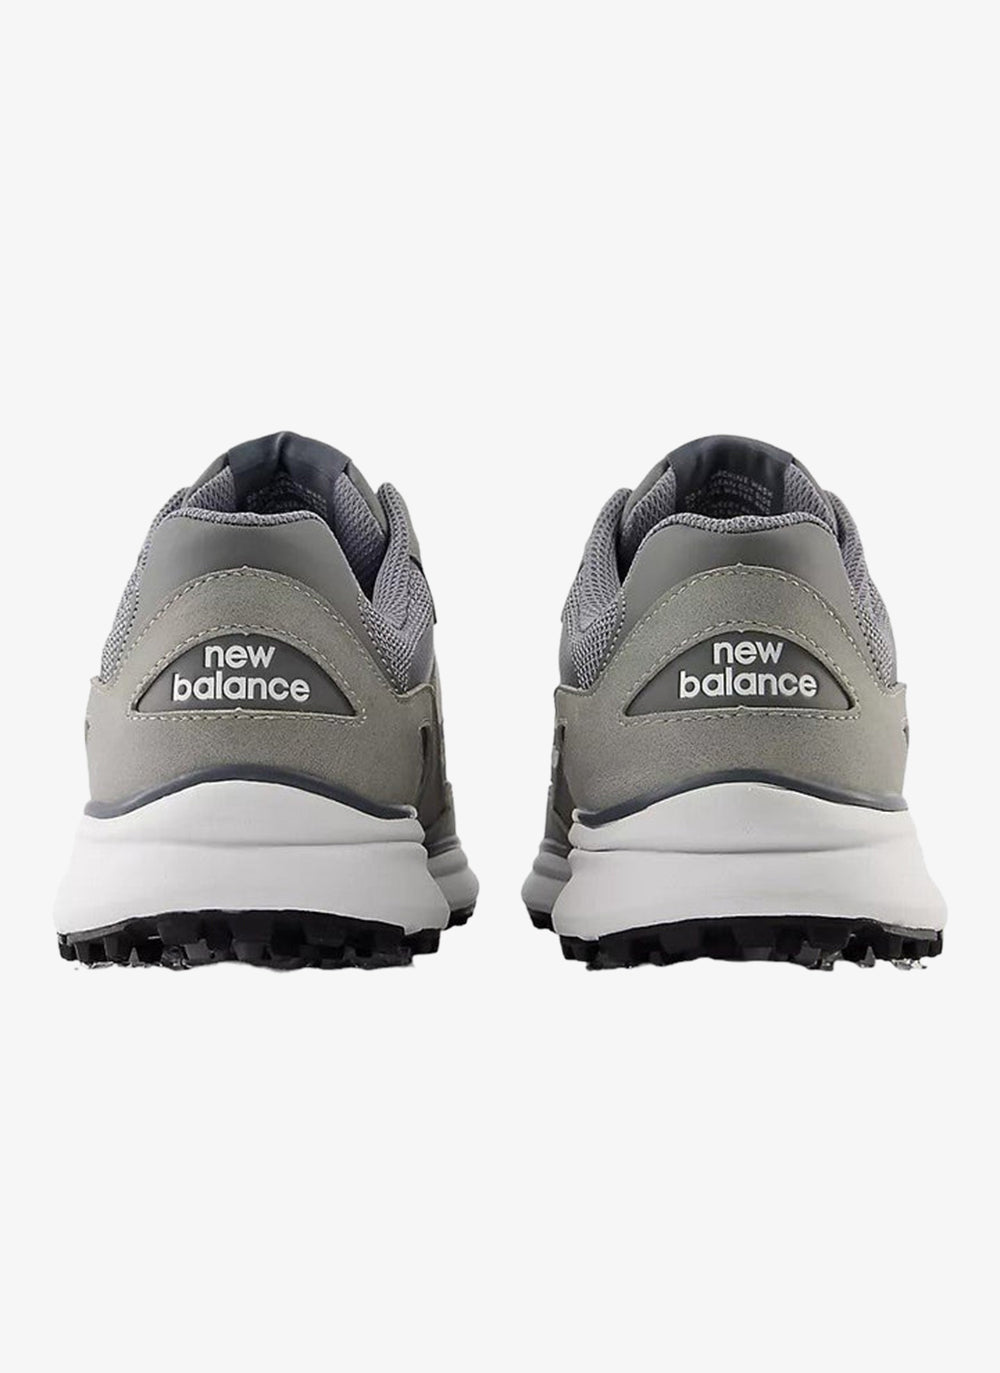 New Balance Heritage Golf Shoes